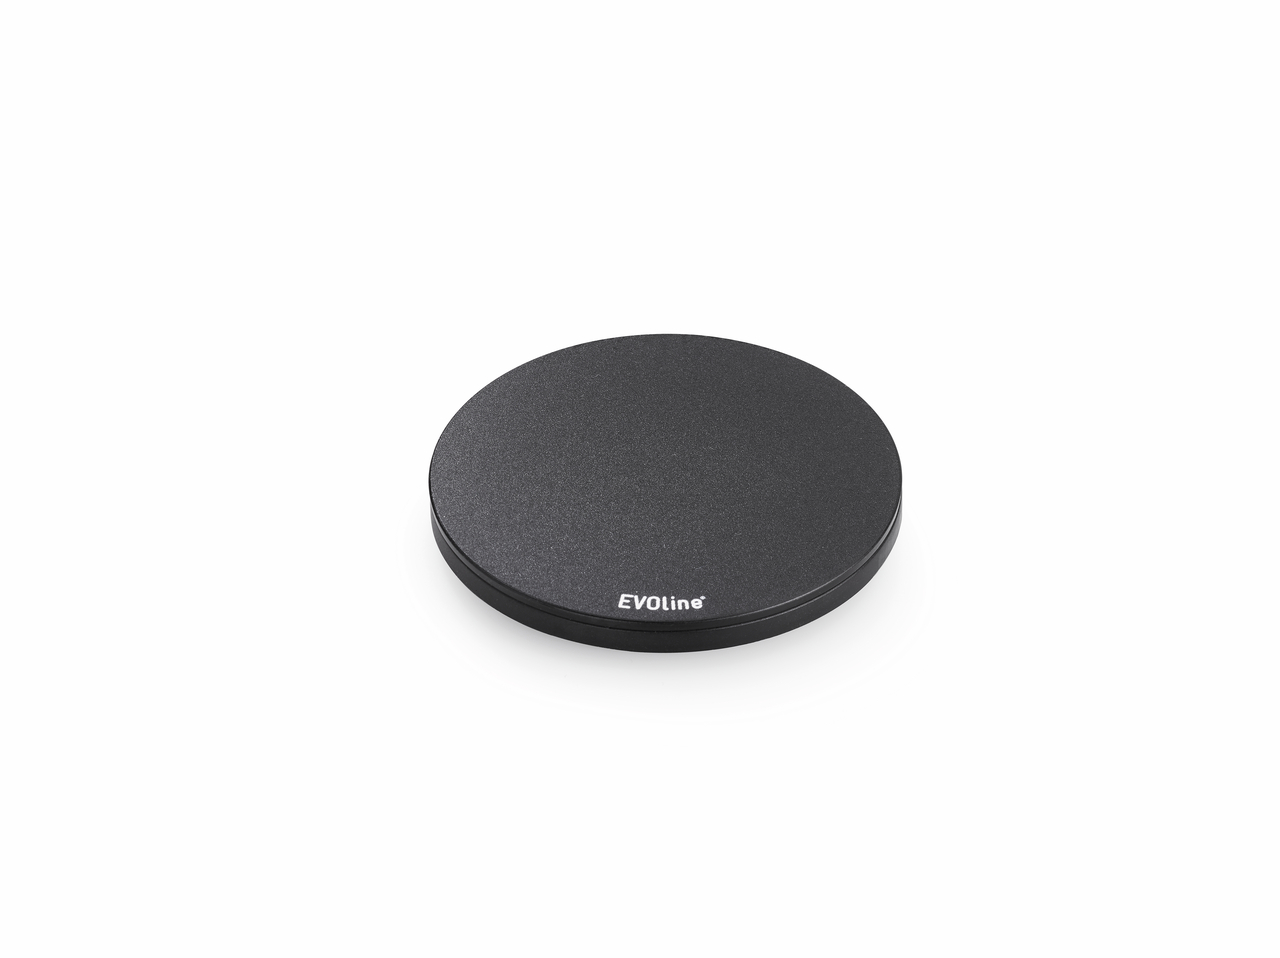  Evoline® One Complete lid black